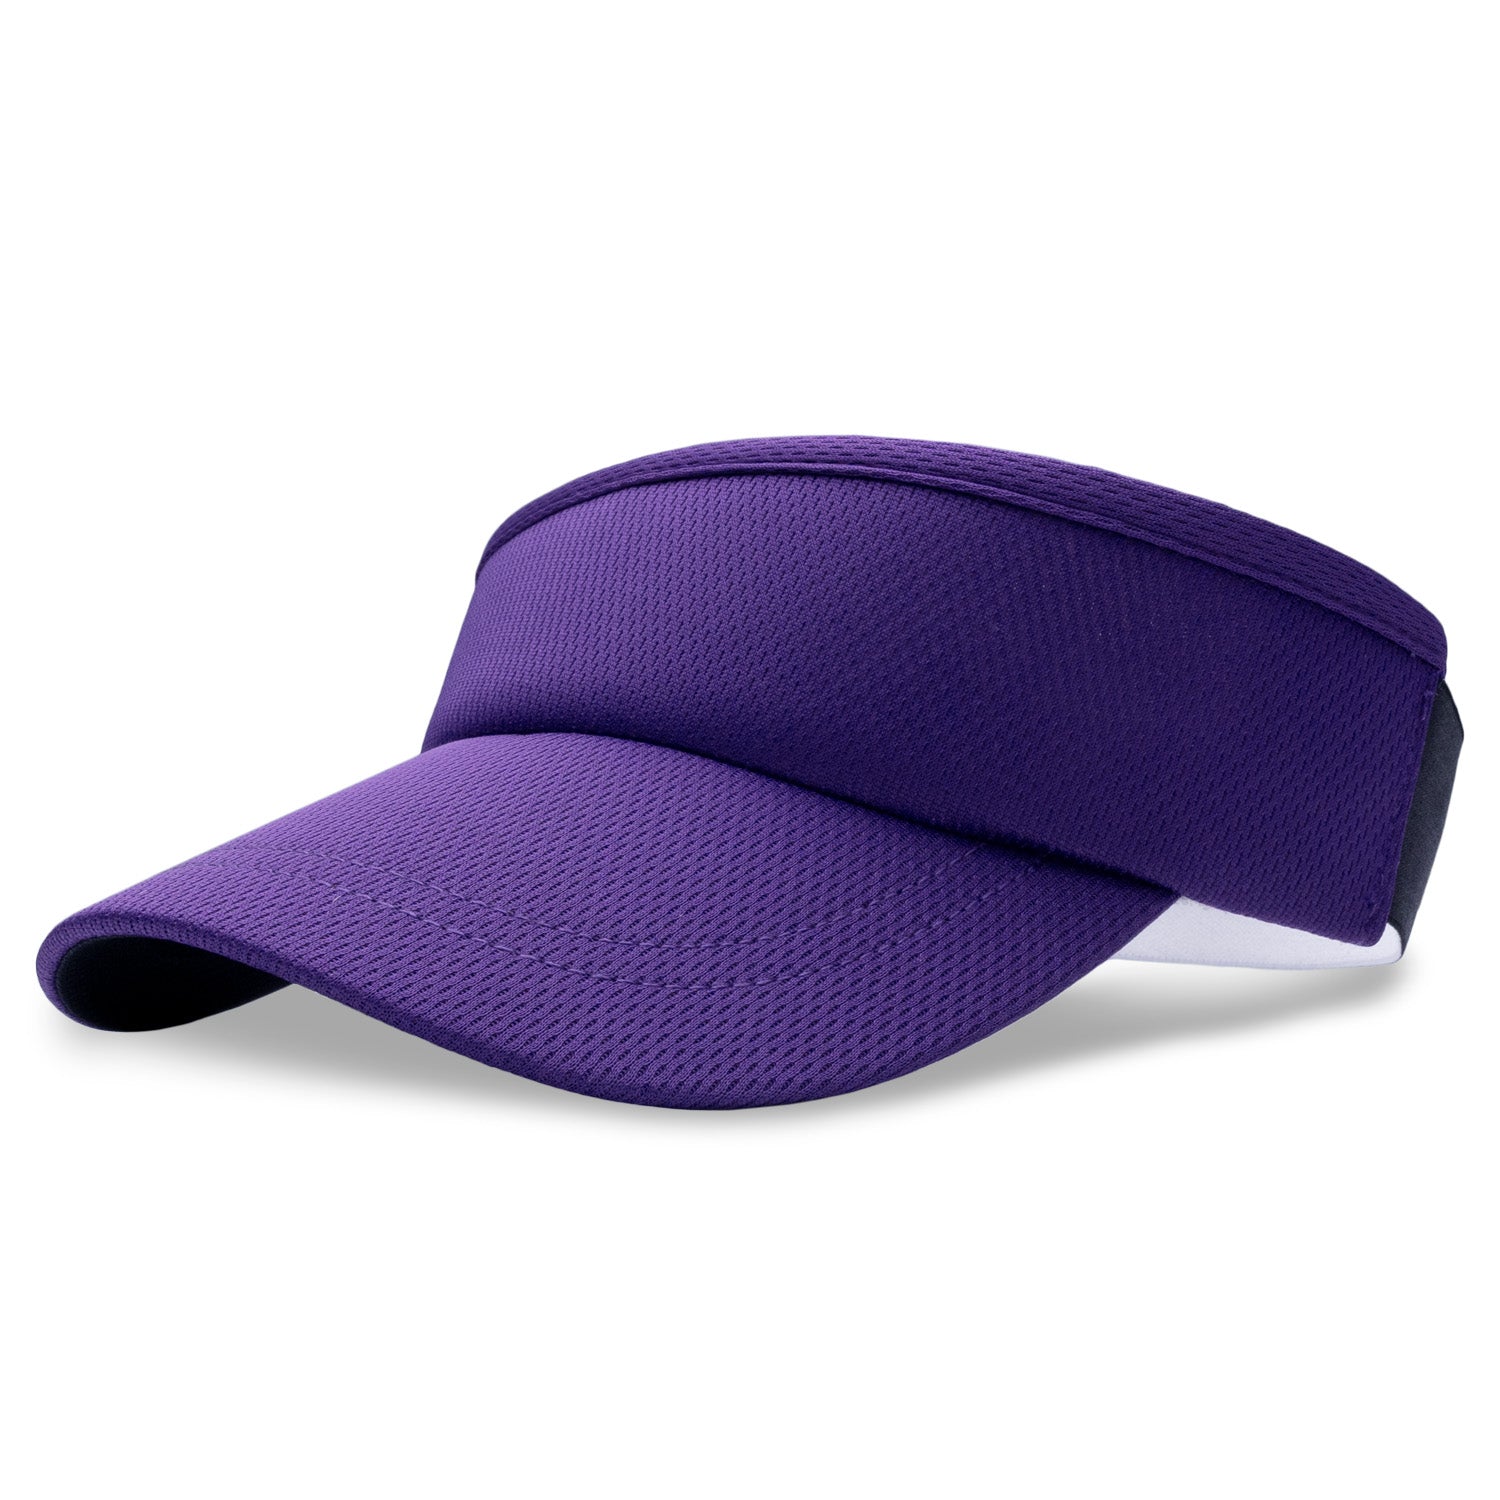 design vfa logo cotton sports sun visor hats